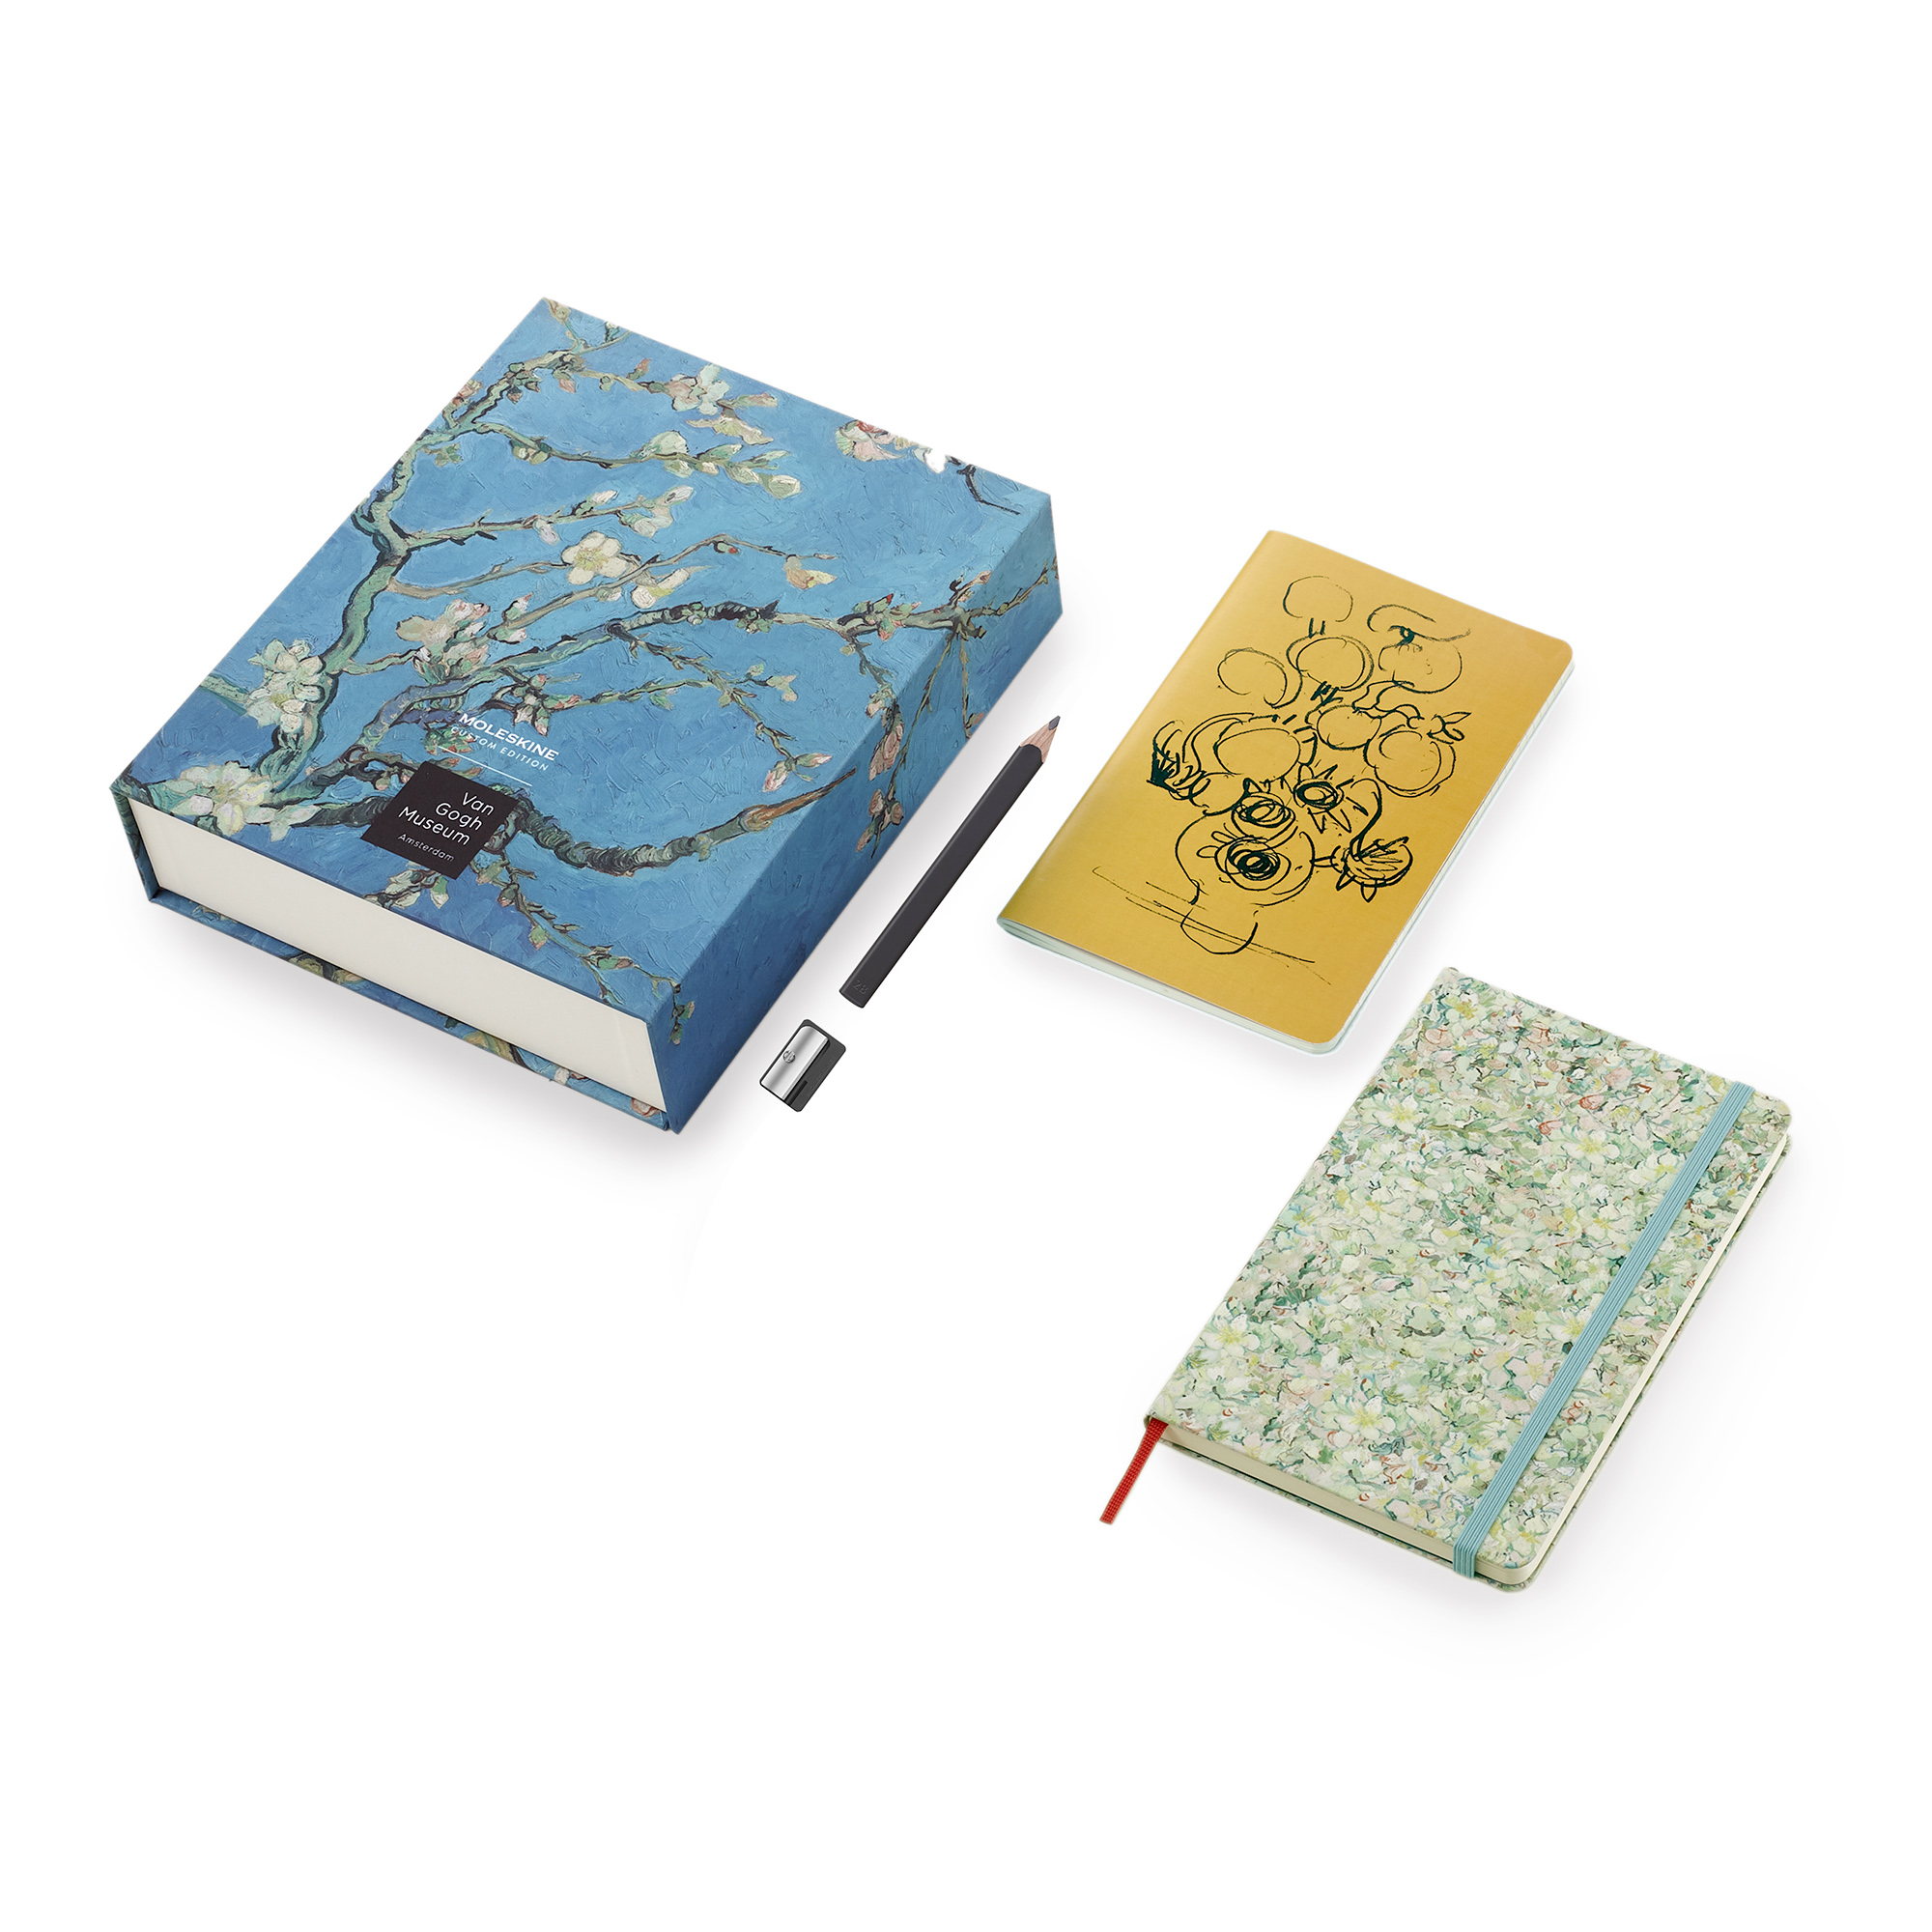 Moleskine x Van Gogh Museum Limited Edition Art Sketchbook